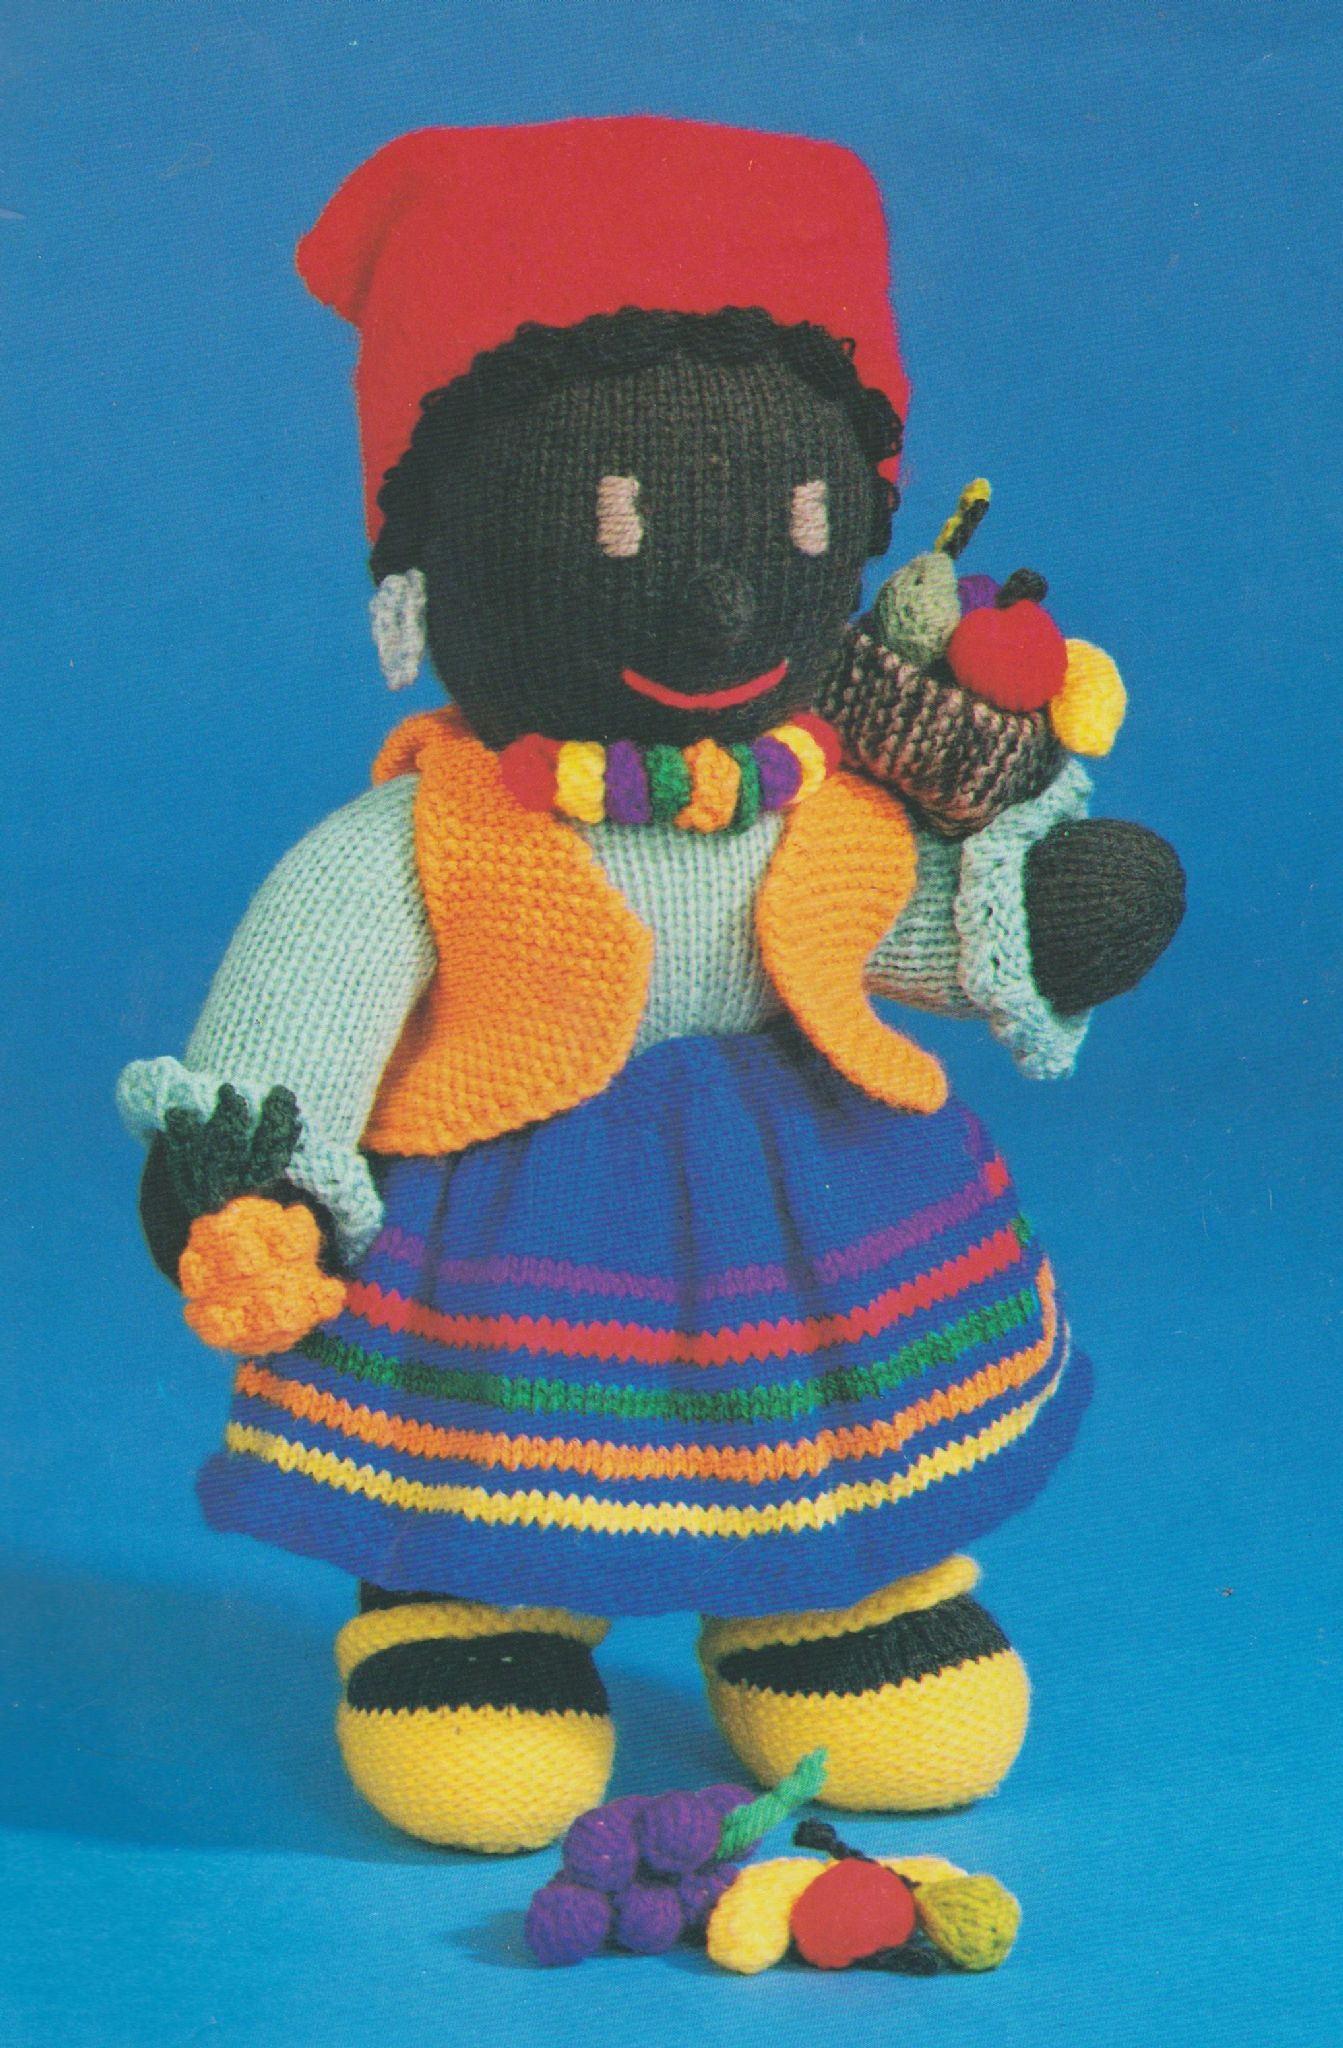 Knitting Patterns For Toys Uk Pdf Digital Vintage Knitting Pattern Stuffed Soft Body Doll Toy Jamaican Girl 30 Cm Double Knittin